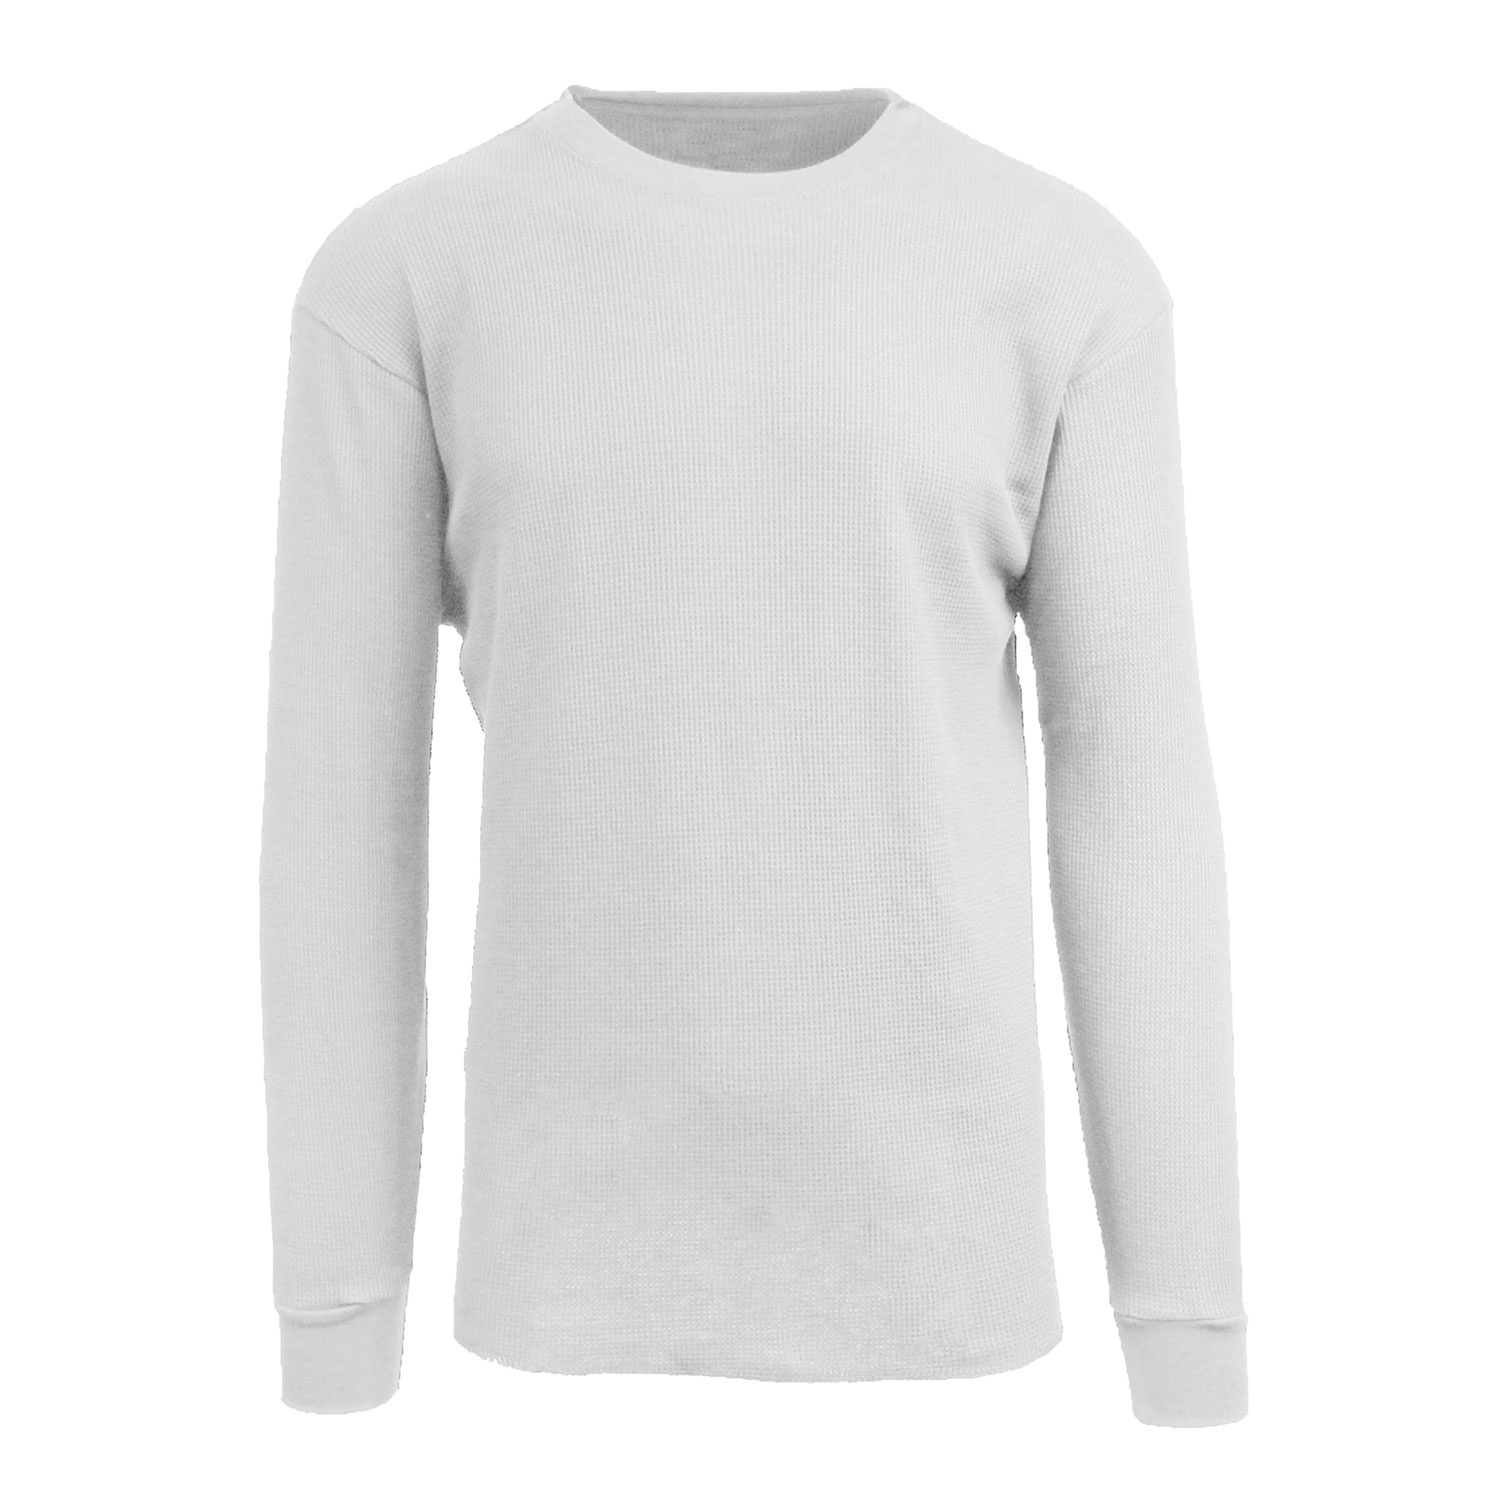 Men's Long Sleeve Waffle-Knit Basic Thermal Shirts